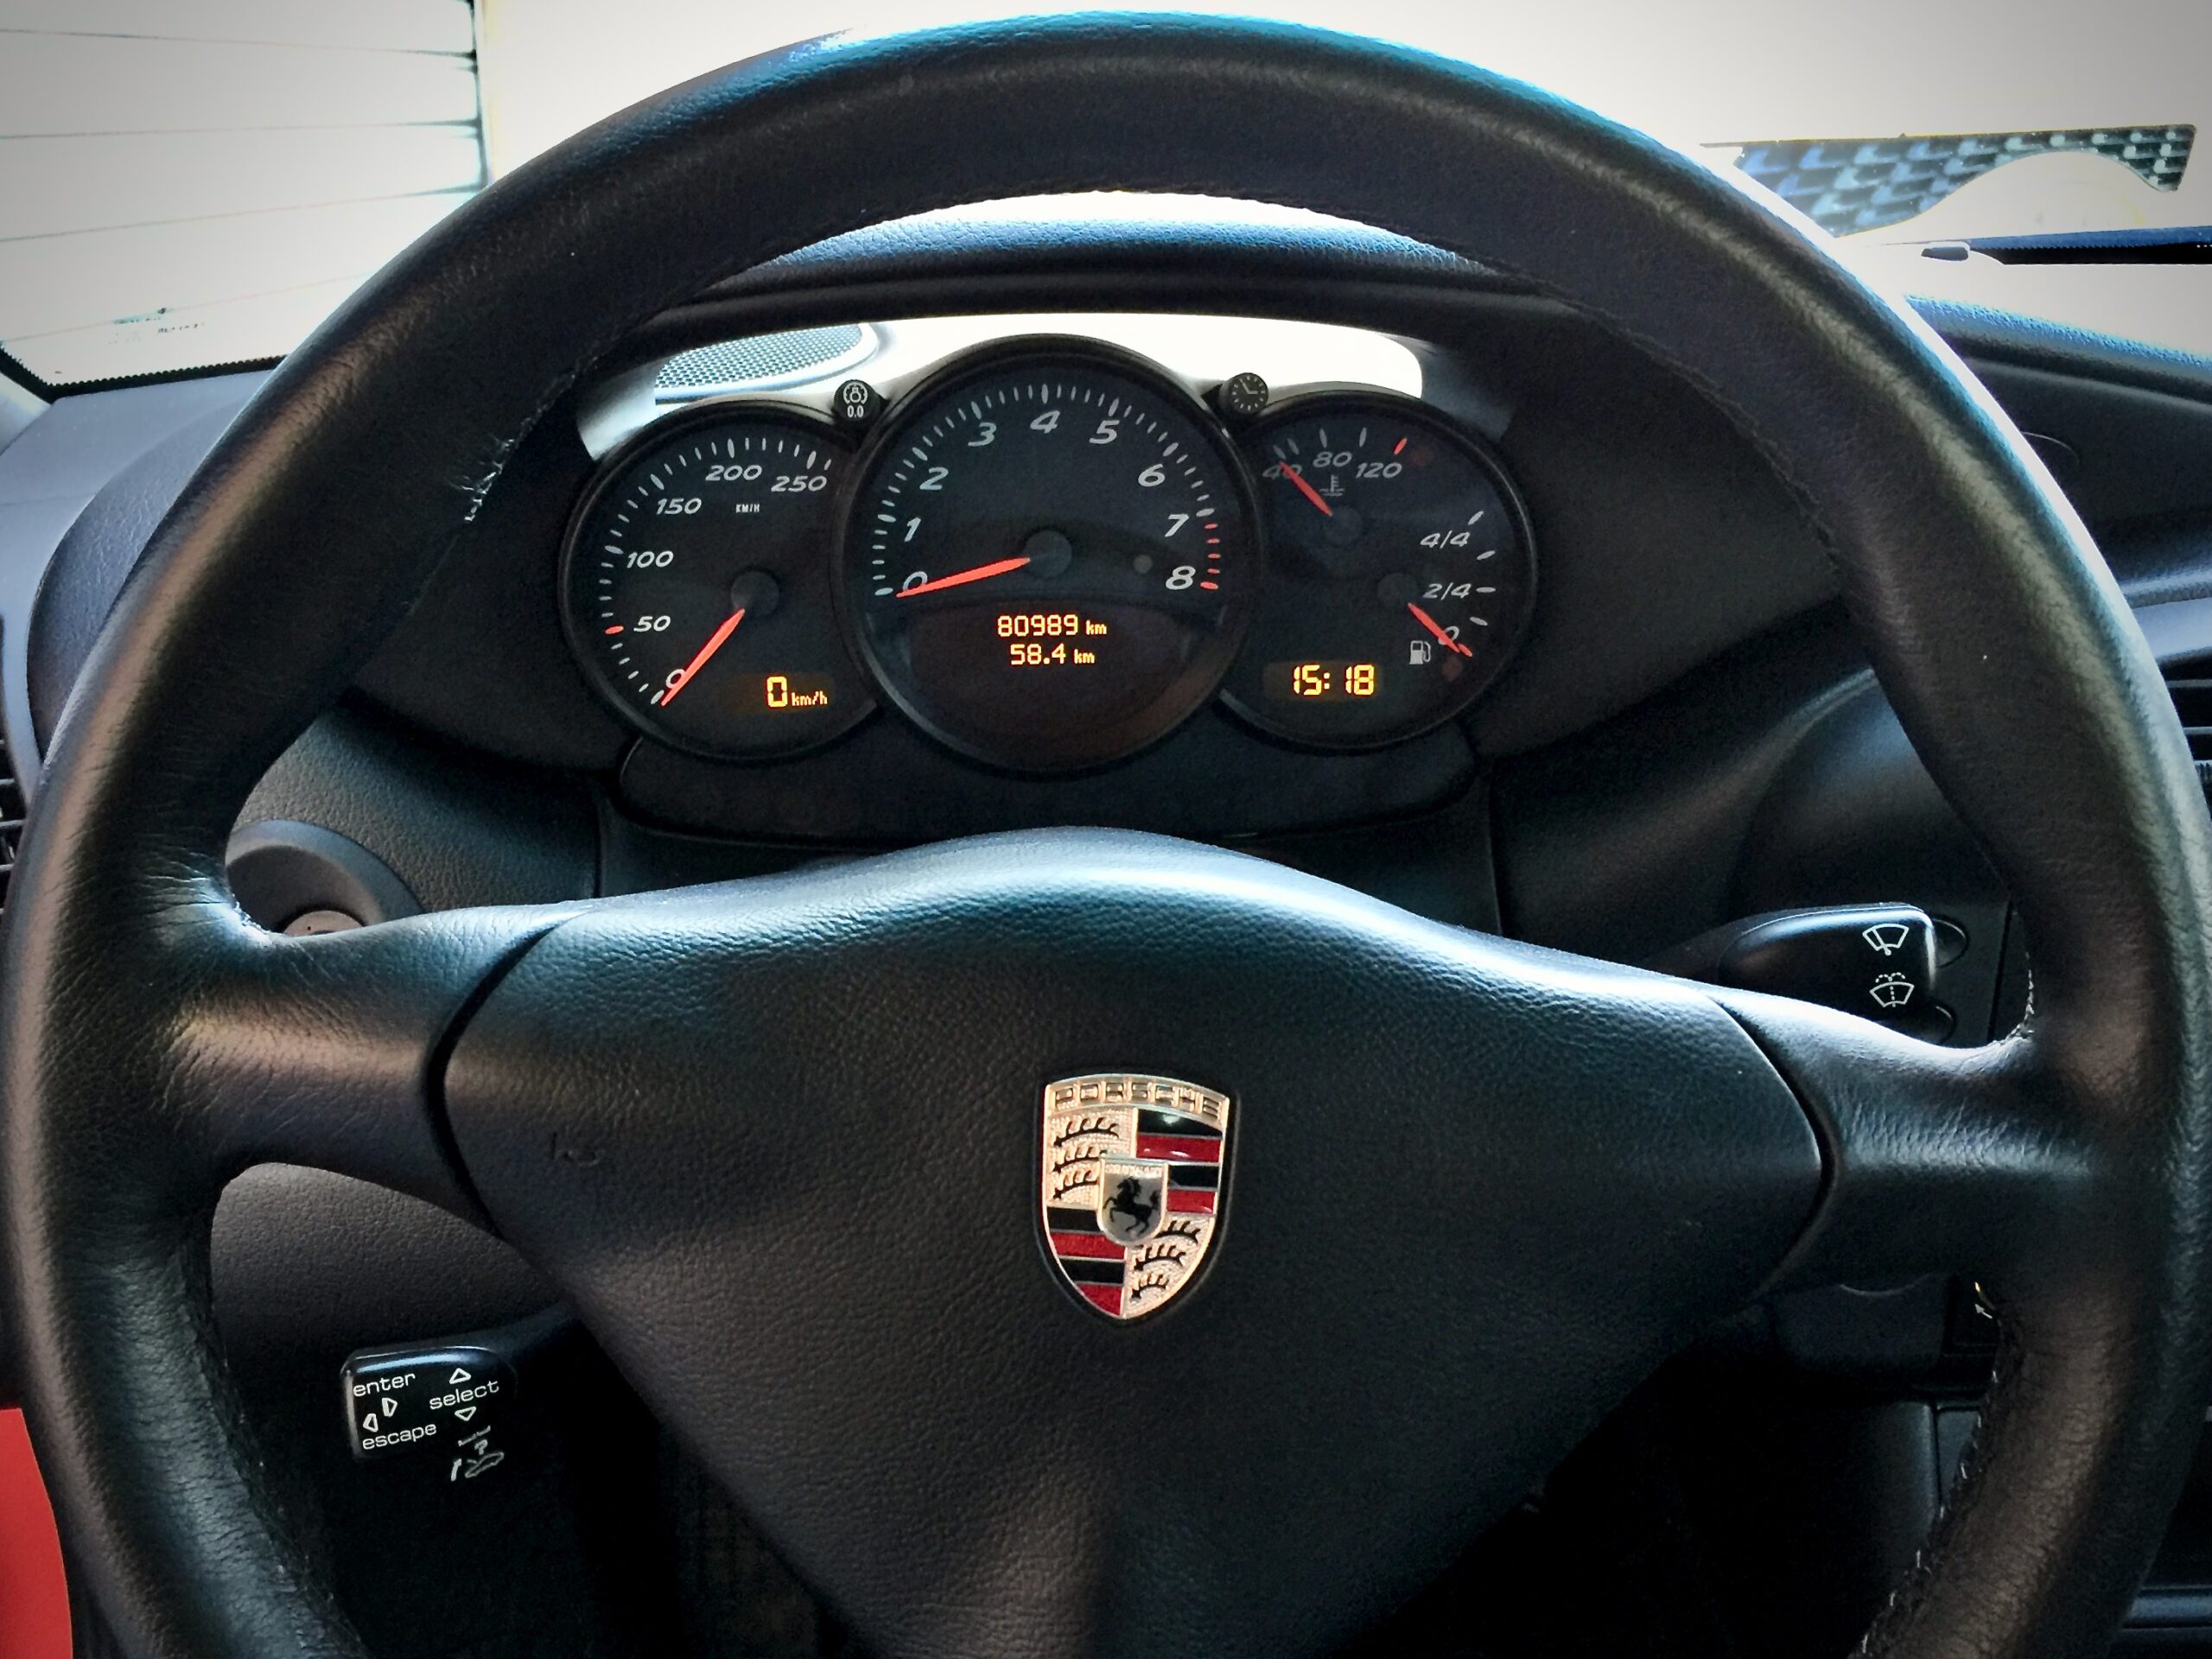 Boxster 986 3-spoke steering wheel